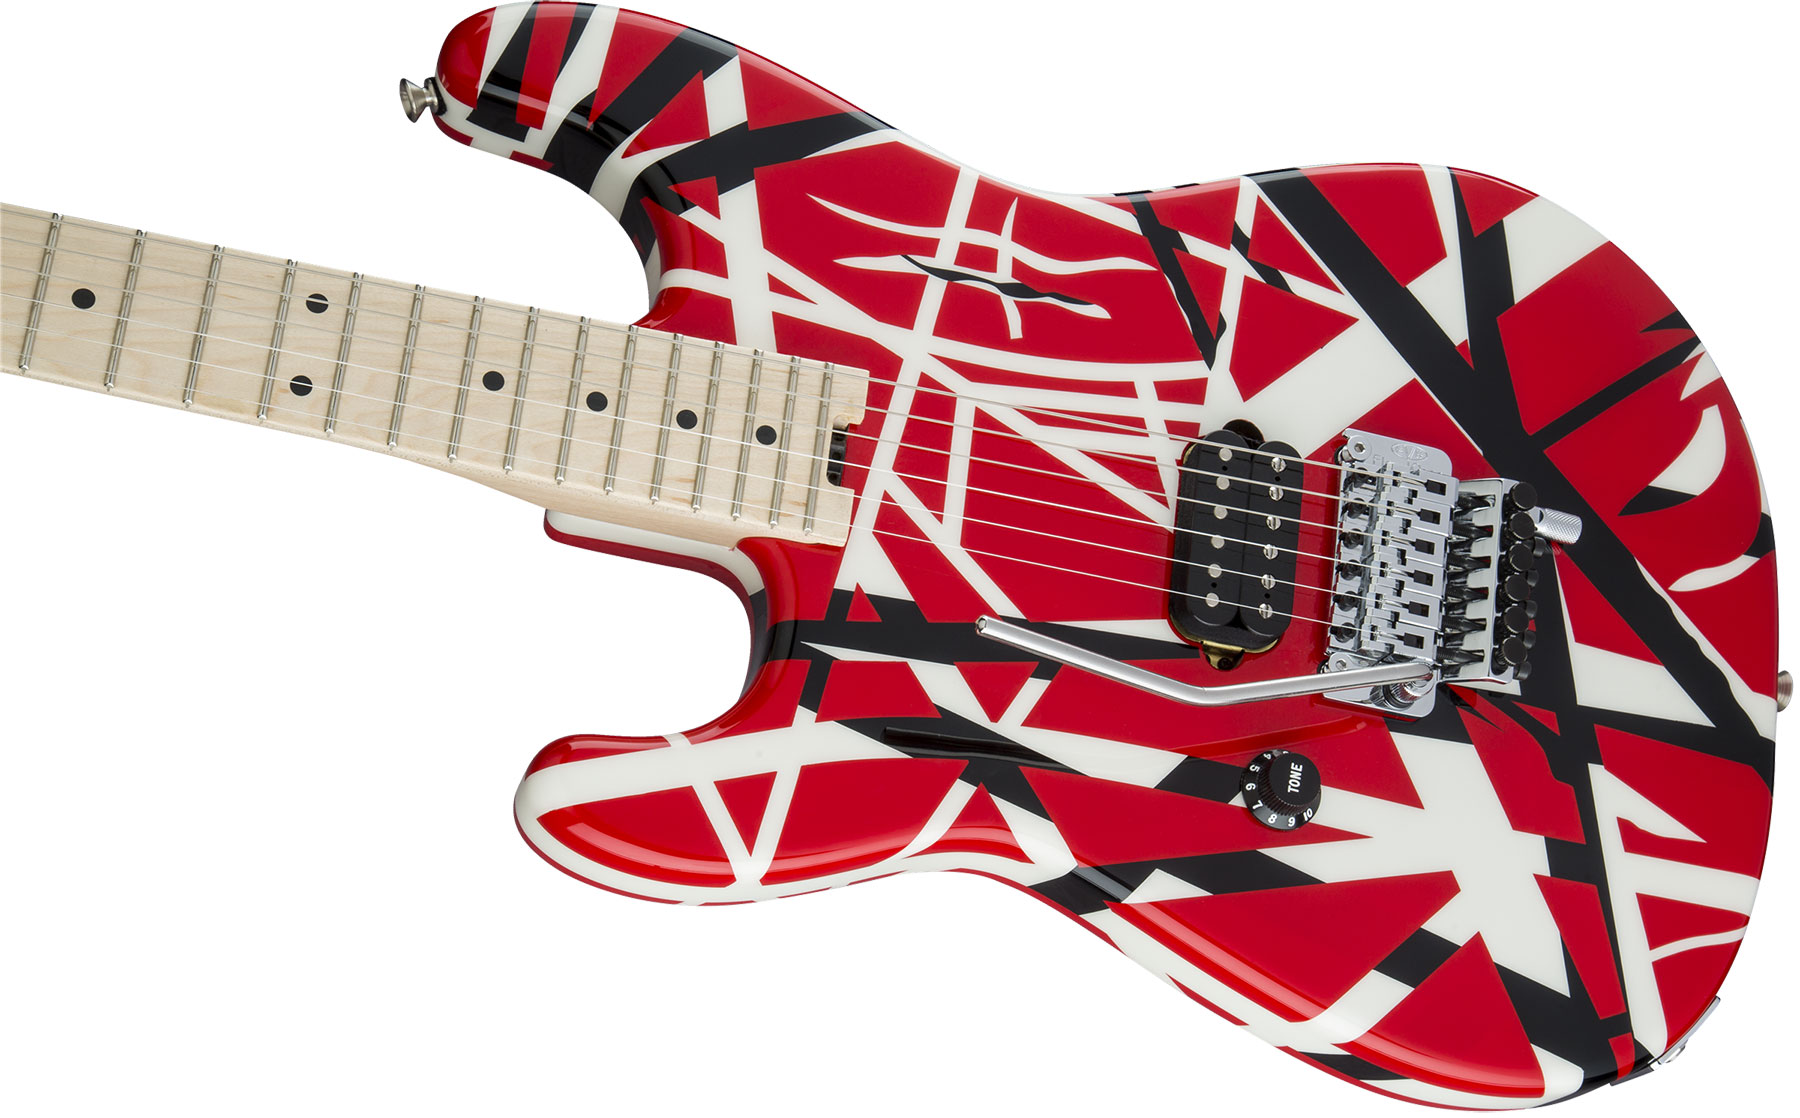 Evh Striped Series Lh Gaucher Signature H Fr Mn - Red Black White Stripes - Left-handed electric guitar - Variation 2